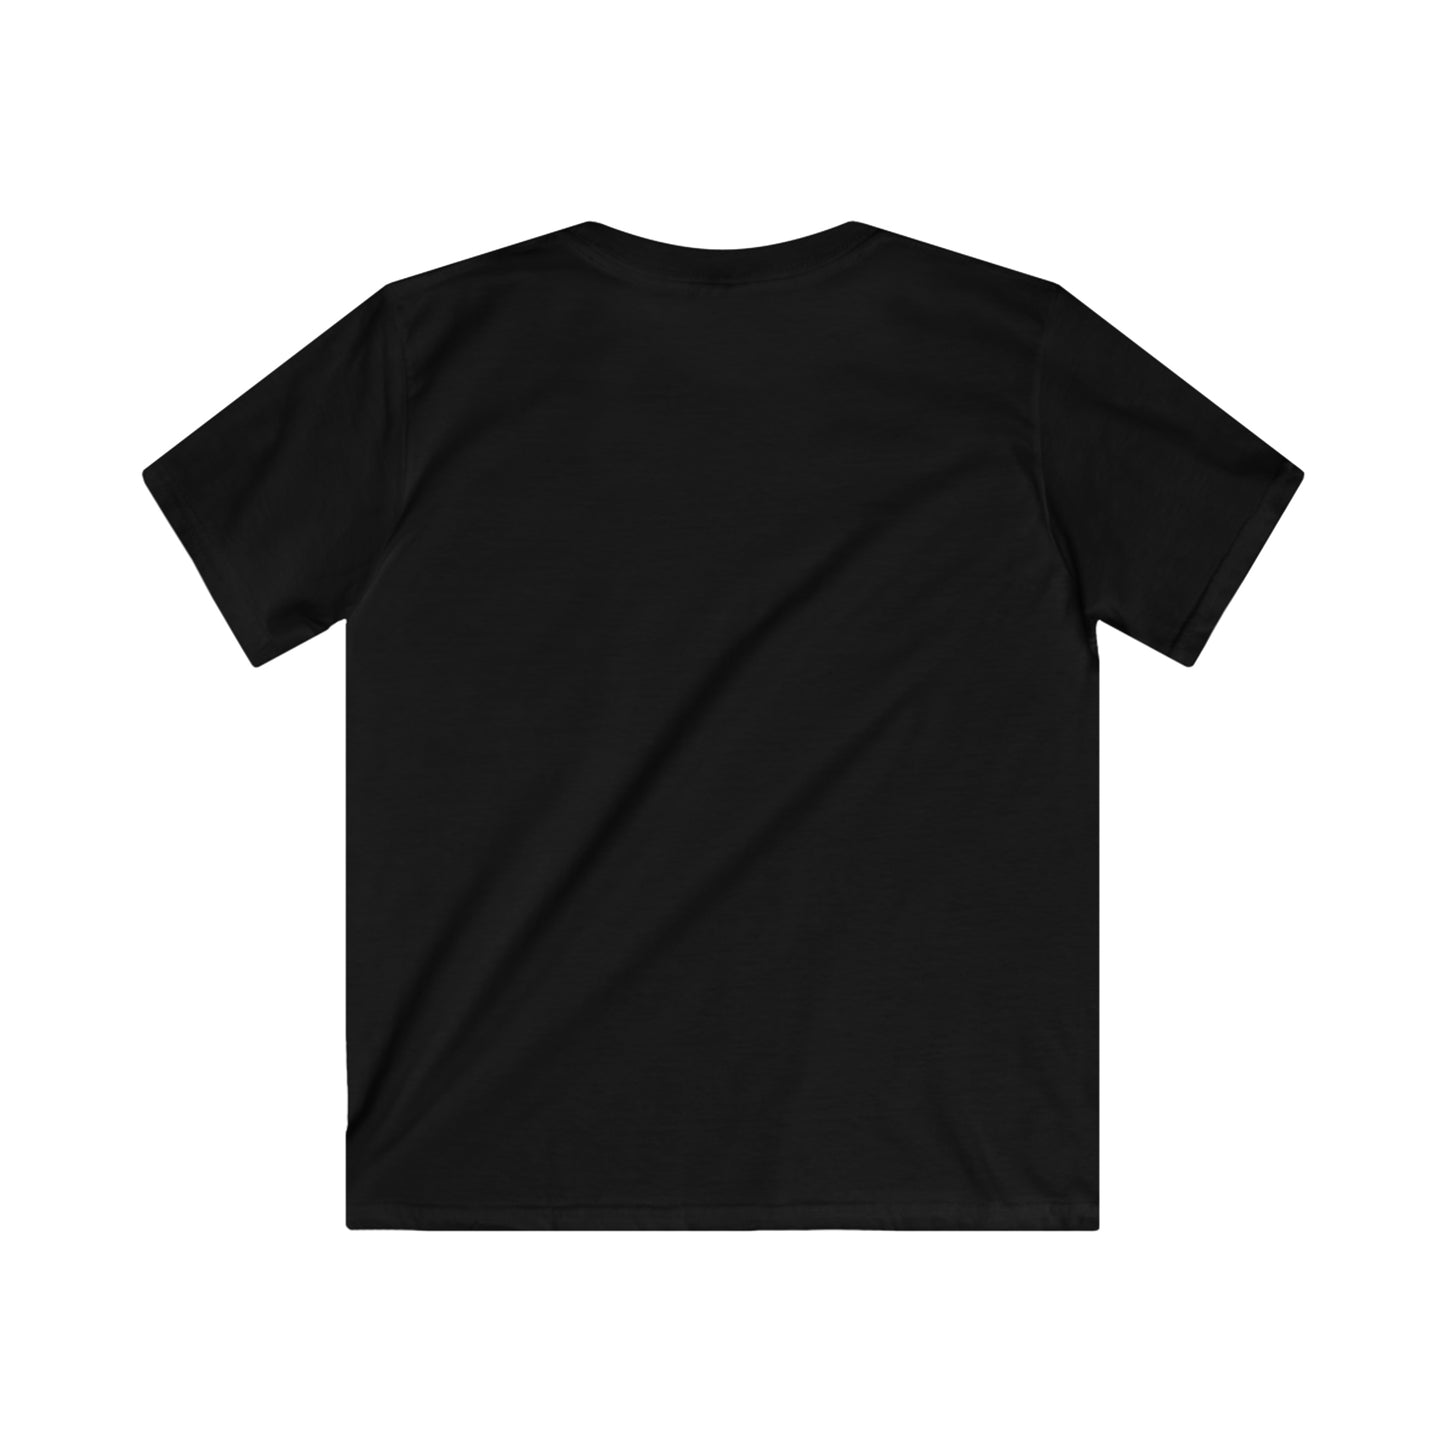 Black - Childrens Unisex Softstyle T Shirt - Black Royal T